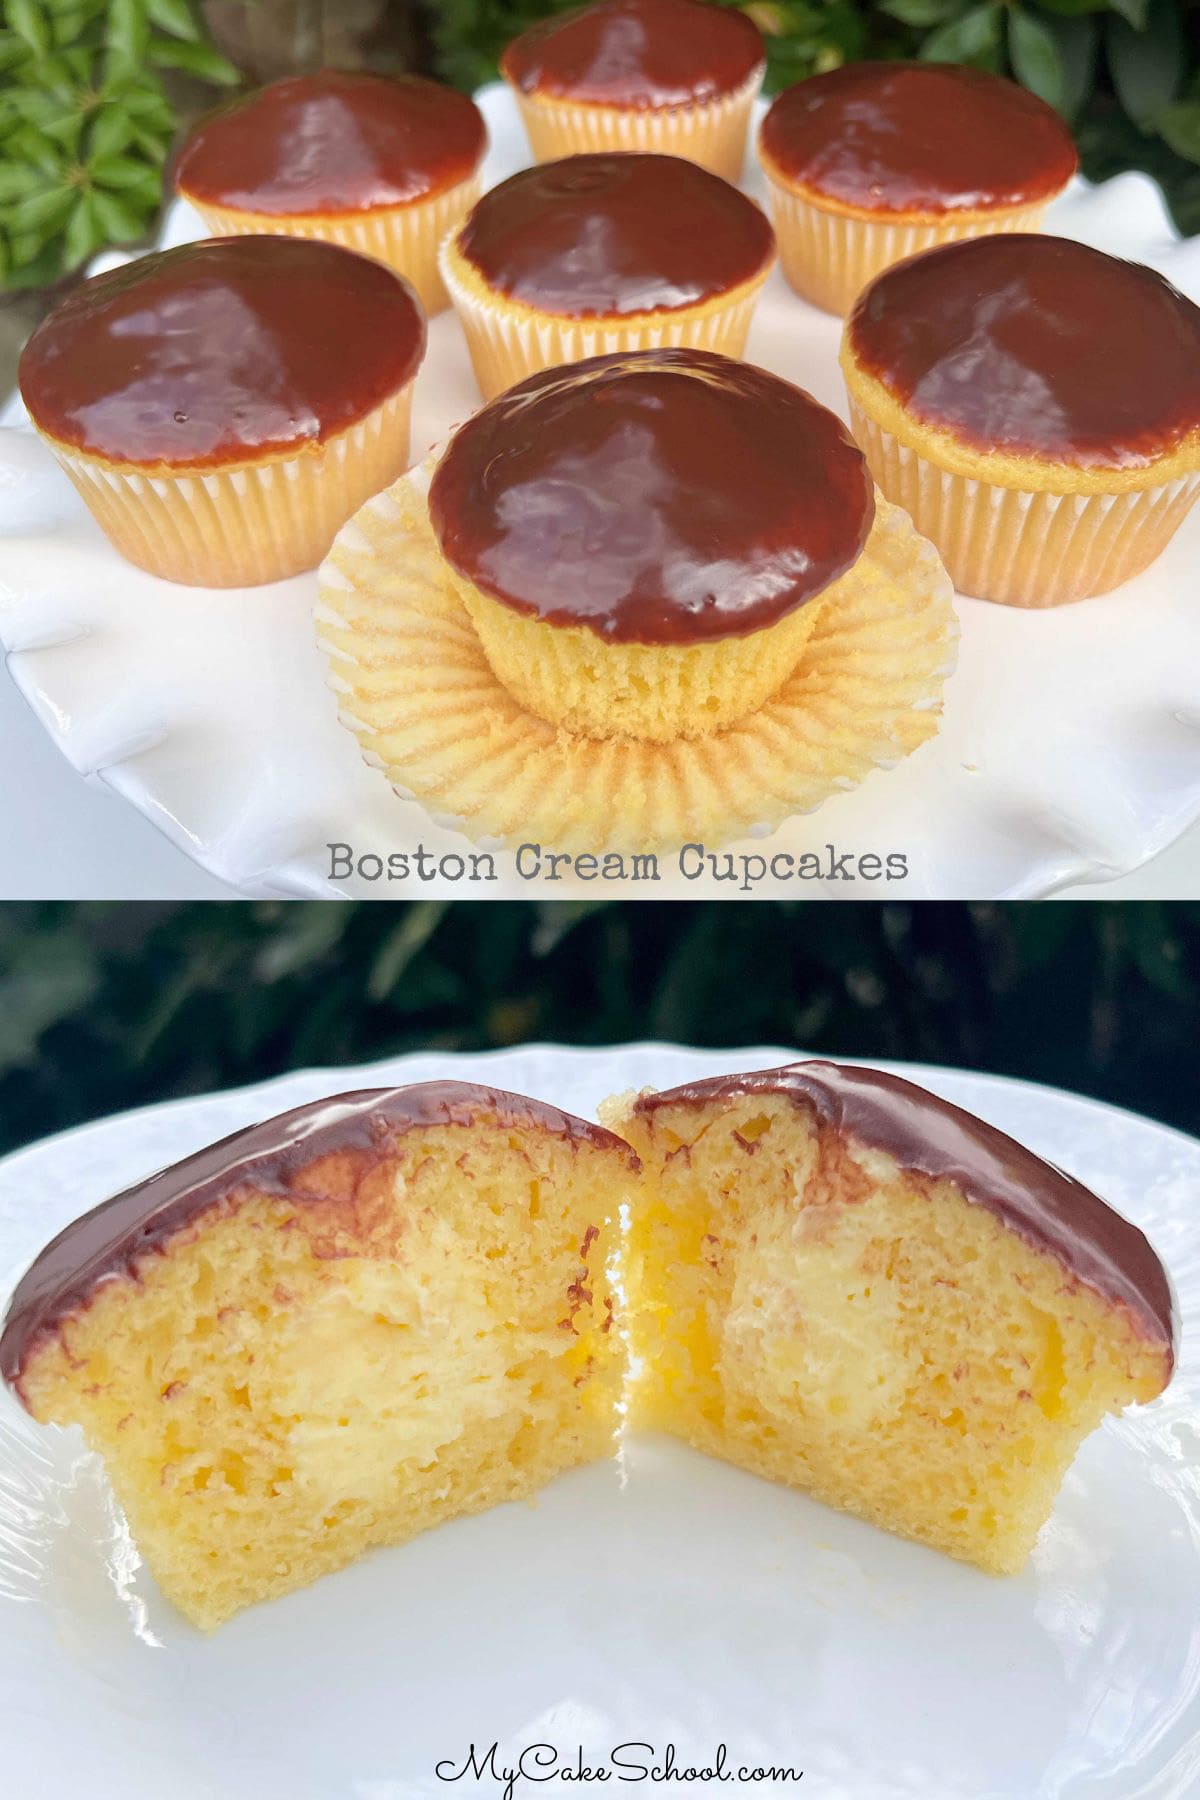 Boston cream cupcakes on platter, one is sliced.